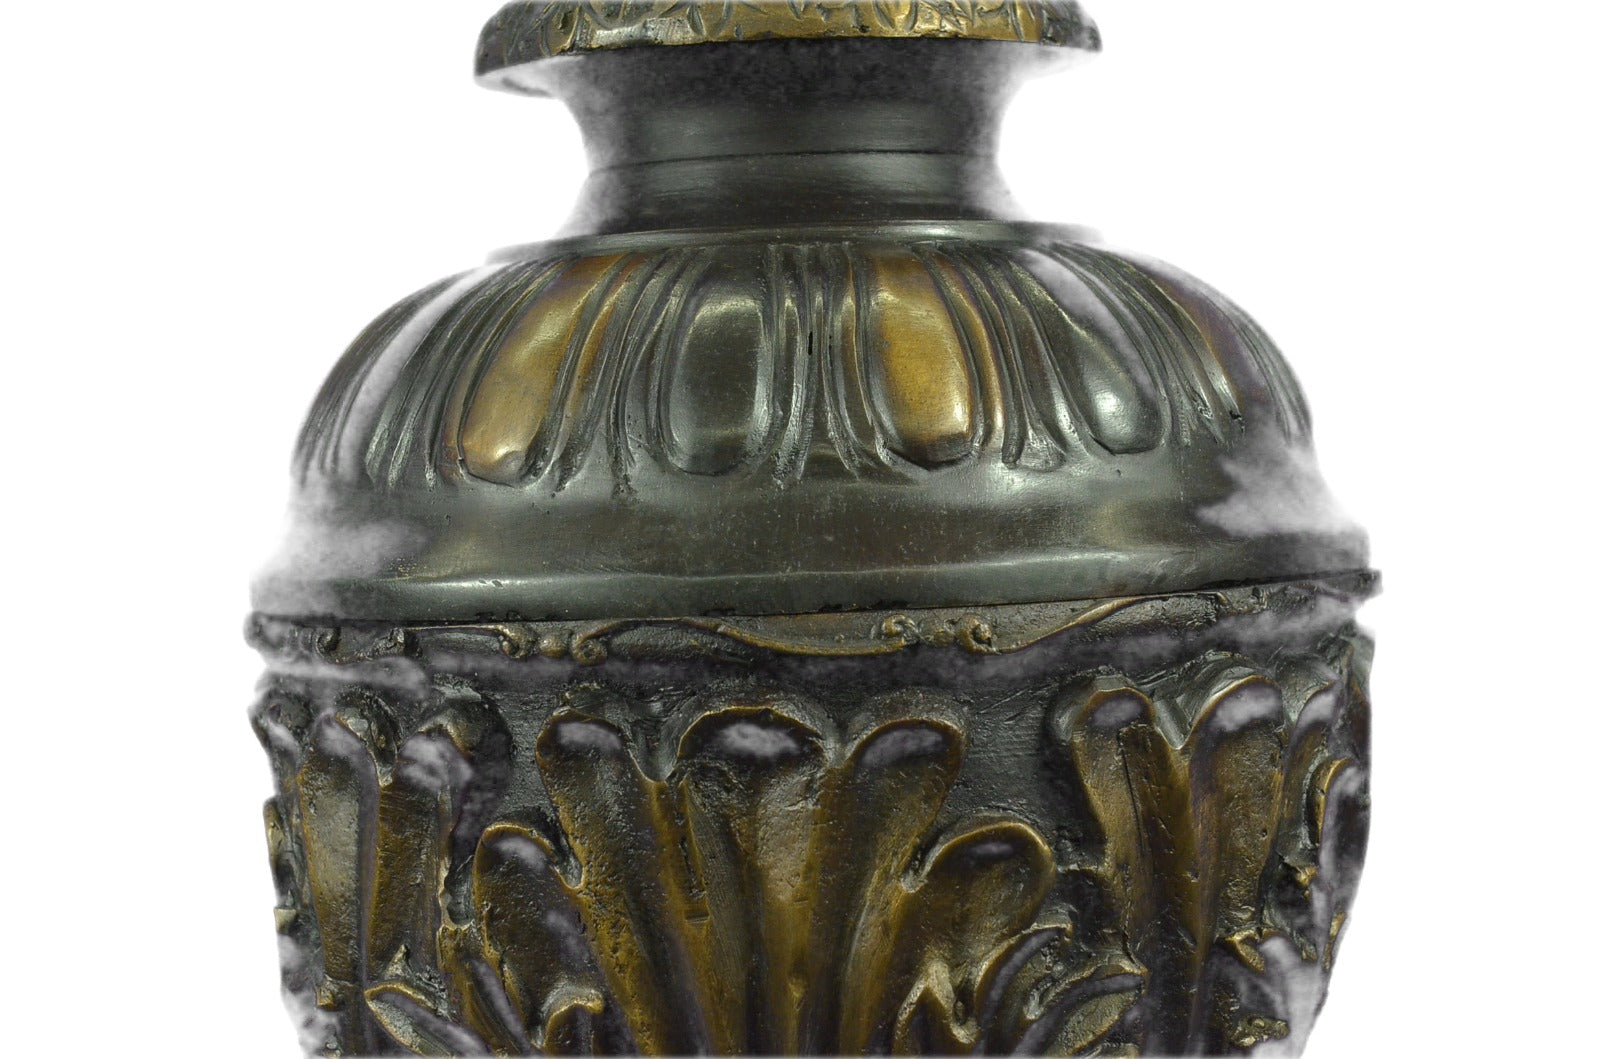 Vintage heavy solid bronze ornate Victorian figural vase pot brass Sculpture